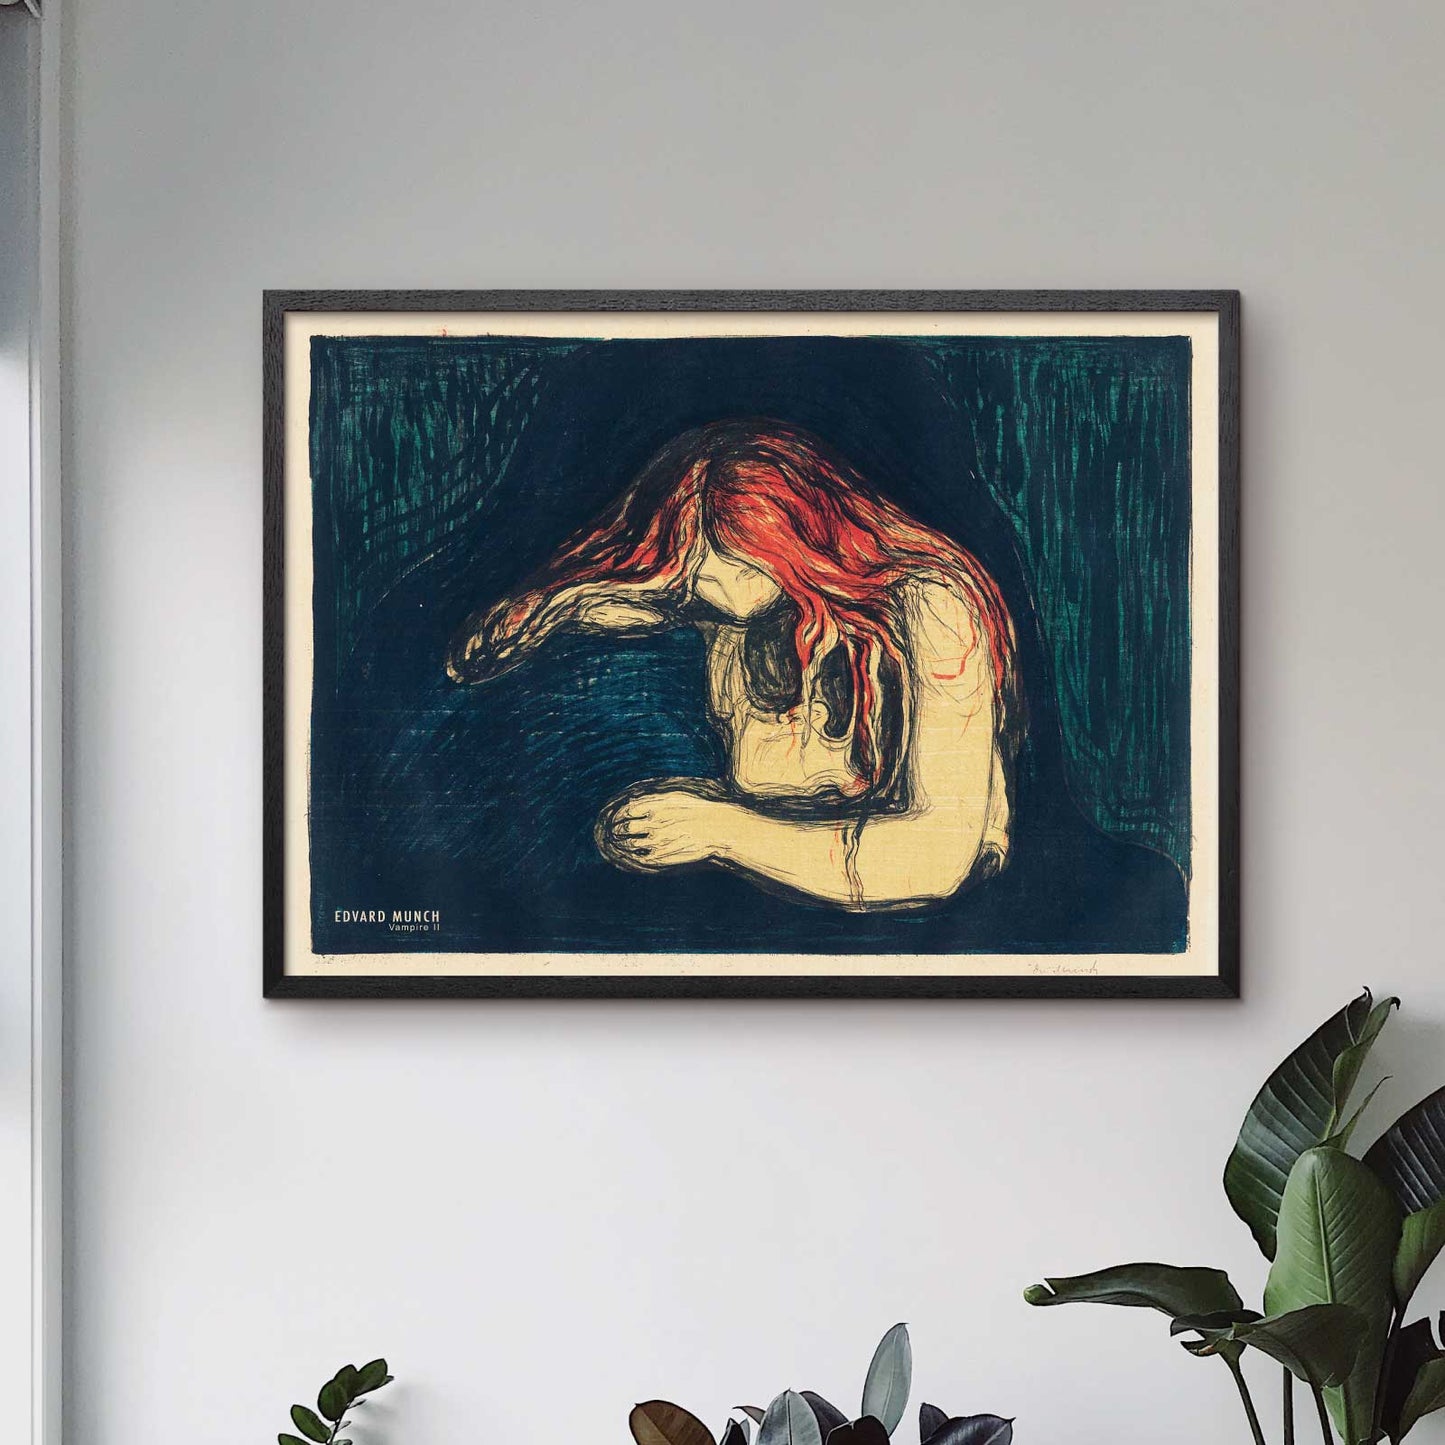 Art poster featuring "Vampire ll" by Edvard Munch